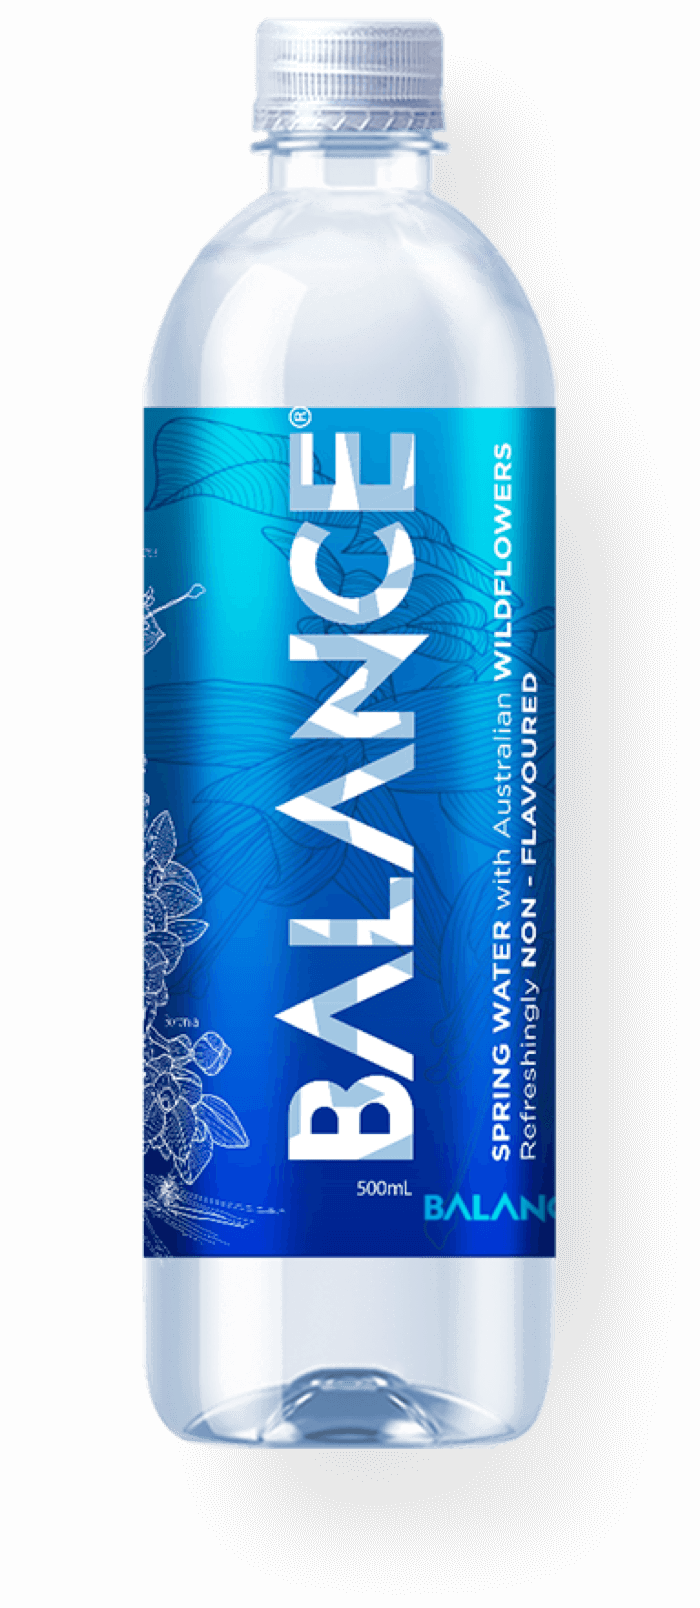 Balance water bottle